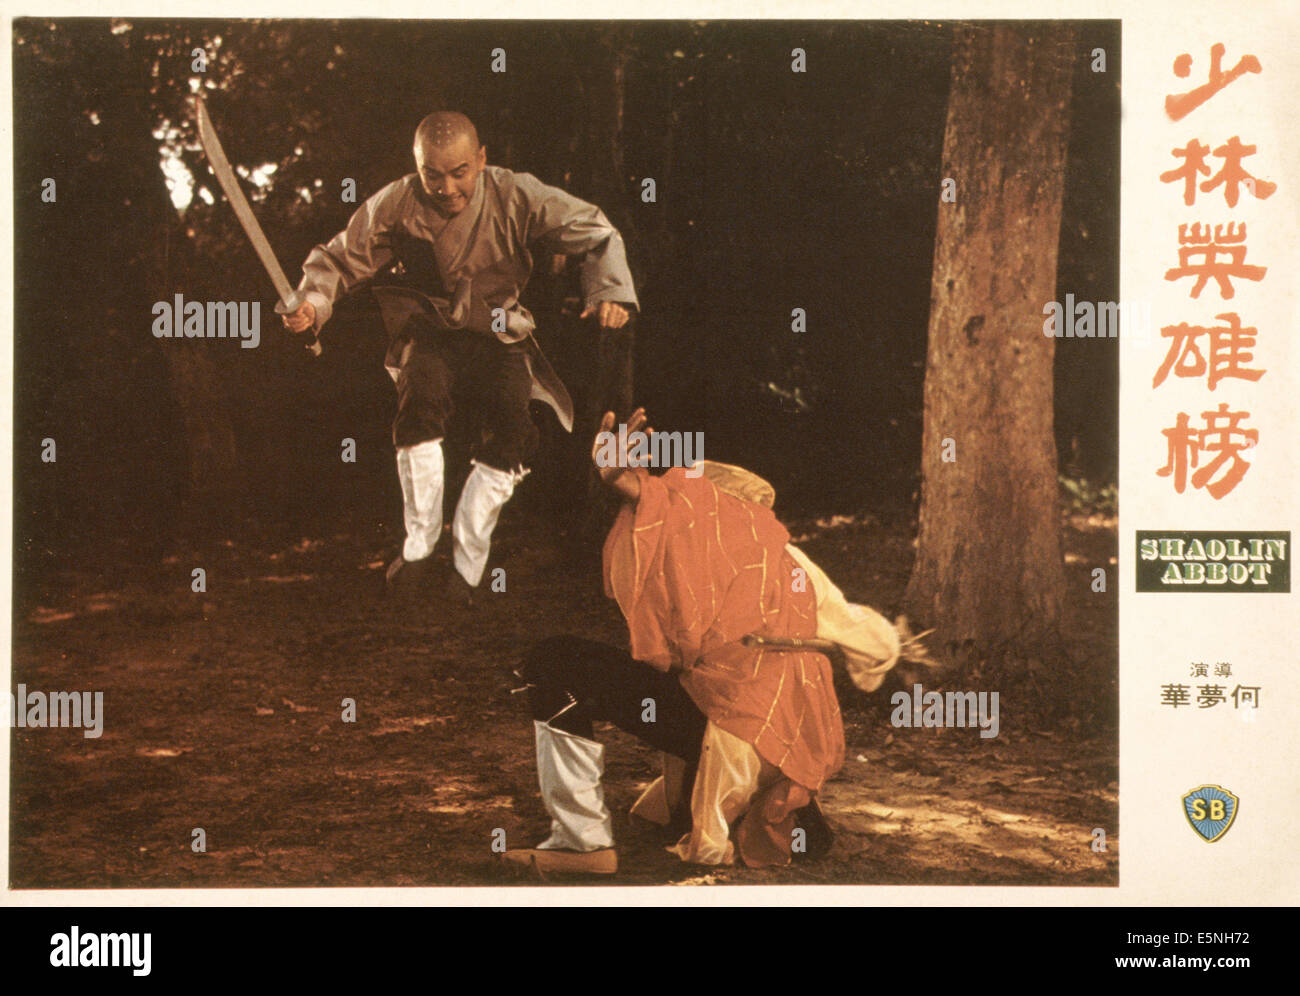 SHAOLIN ABBOT, (aka SHAO LIN YING XIONG BANG), US lobbycard, 1979, © World Northal/courtesy Everett Collection Stock Photo